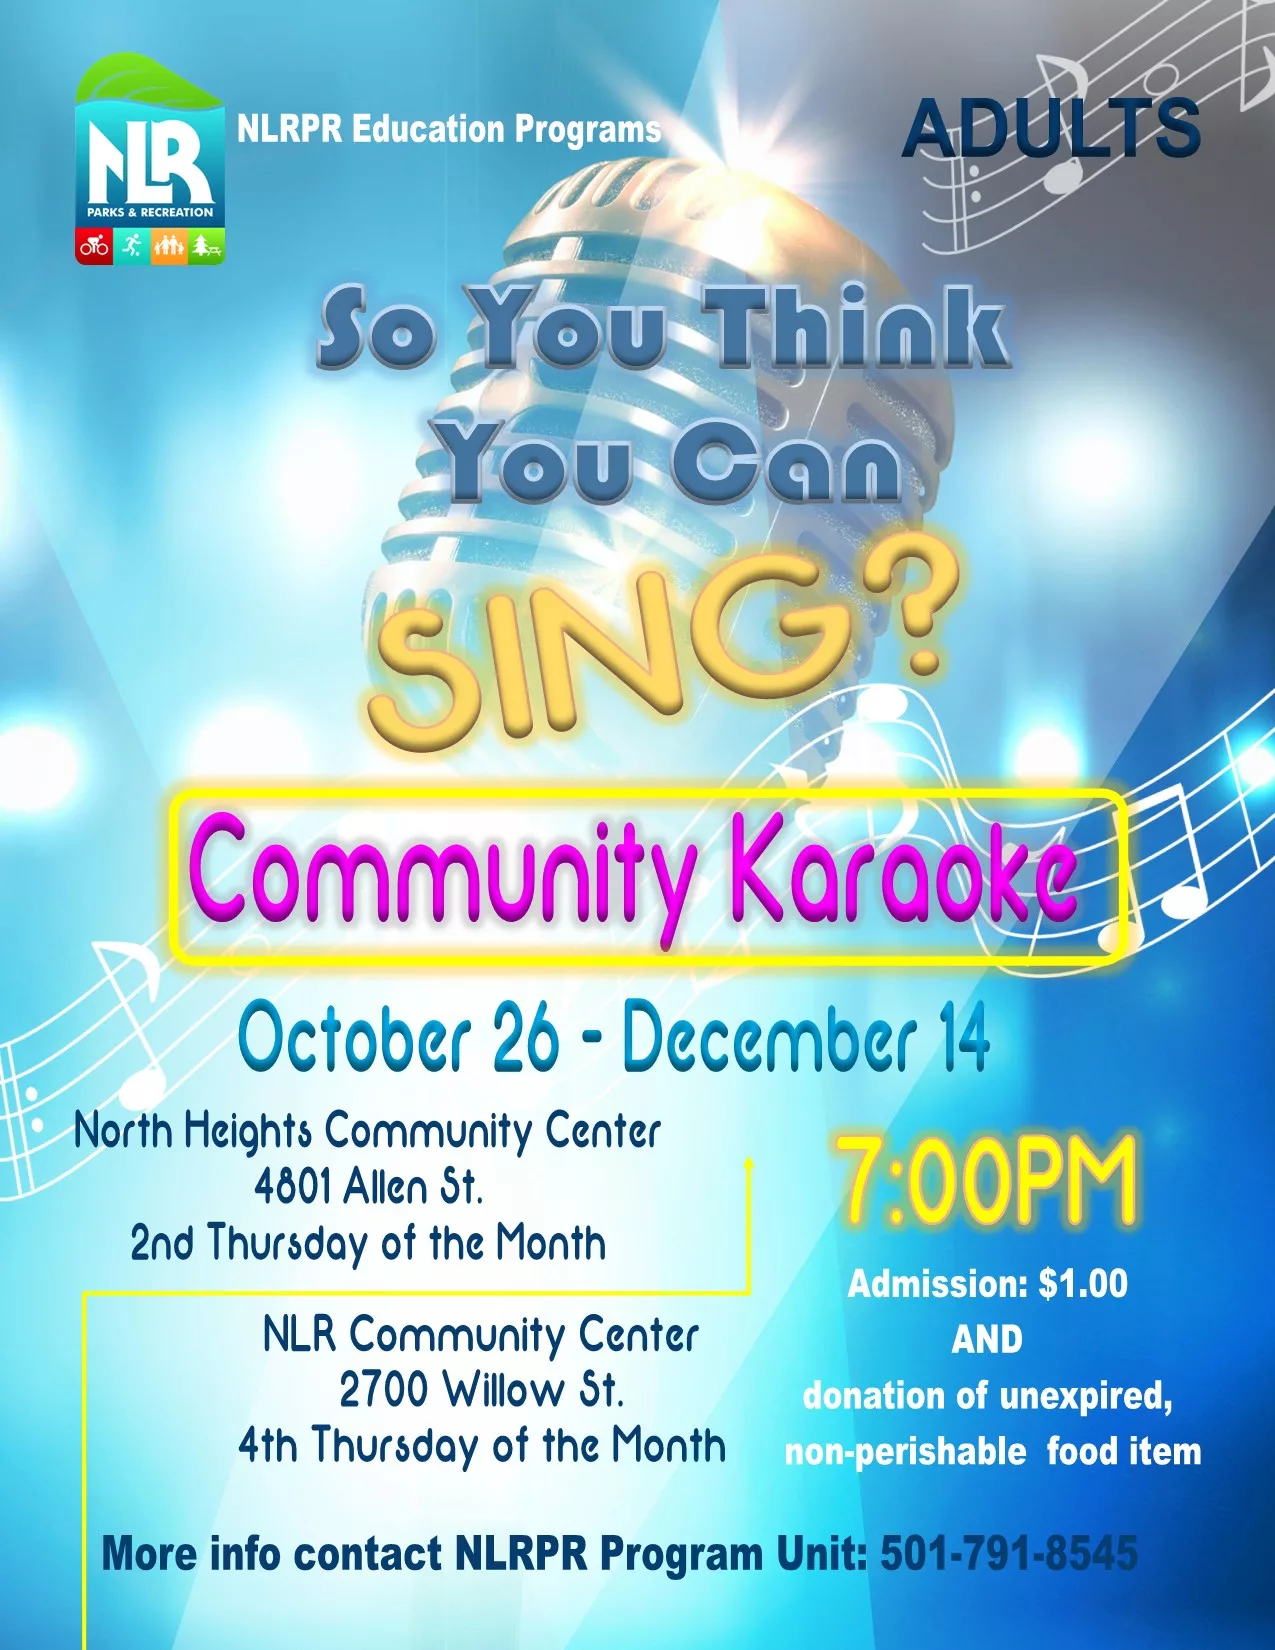 community karaoke event info